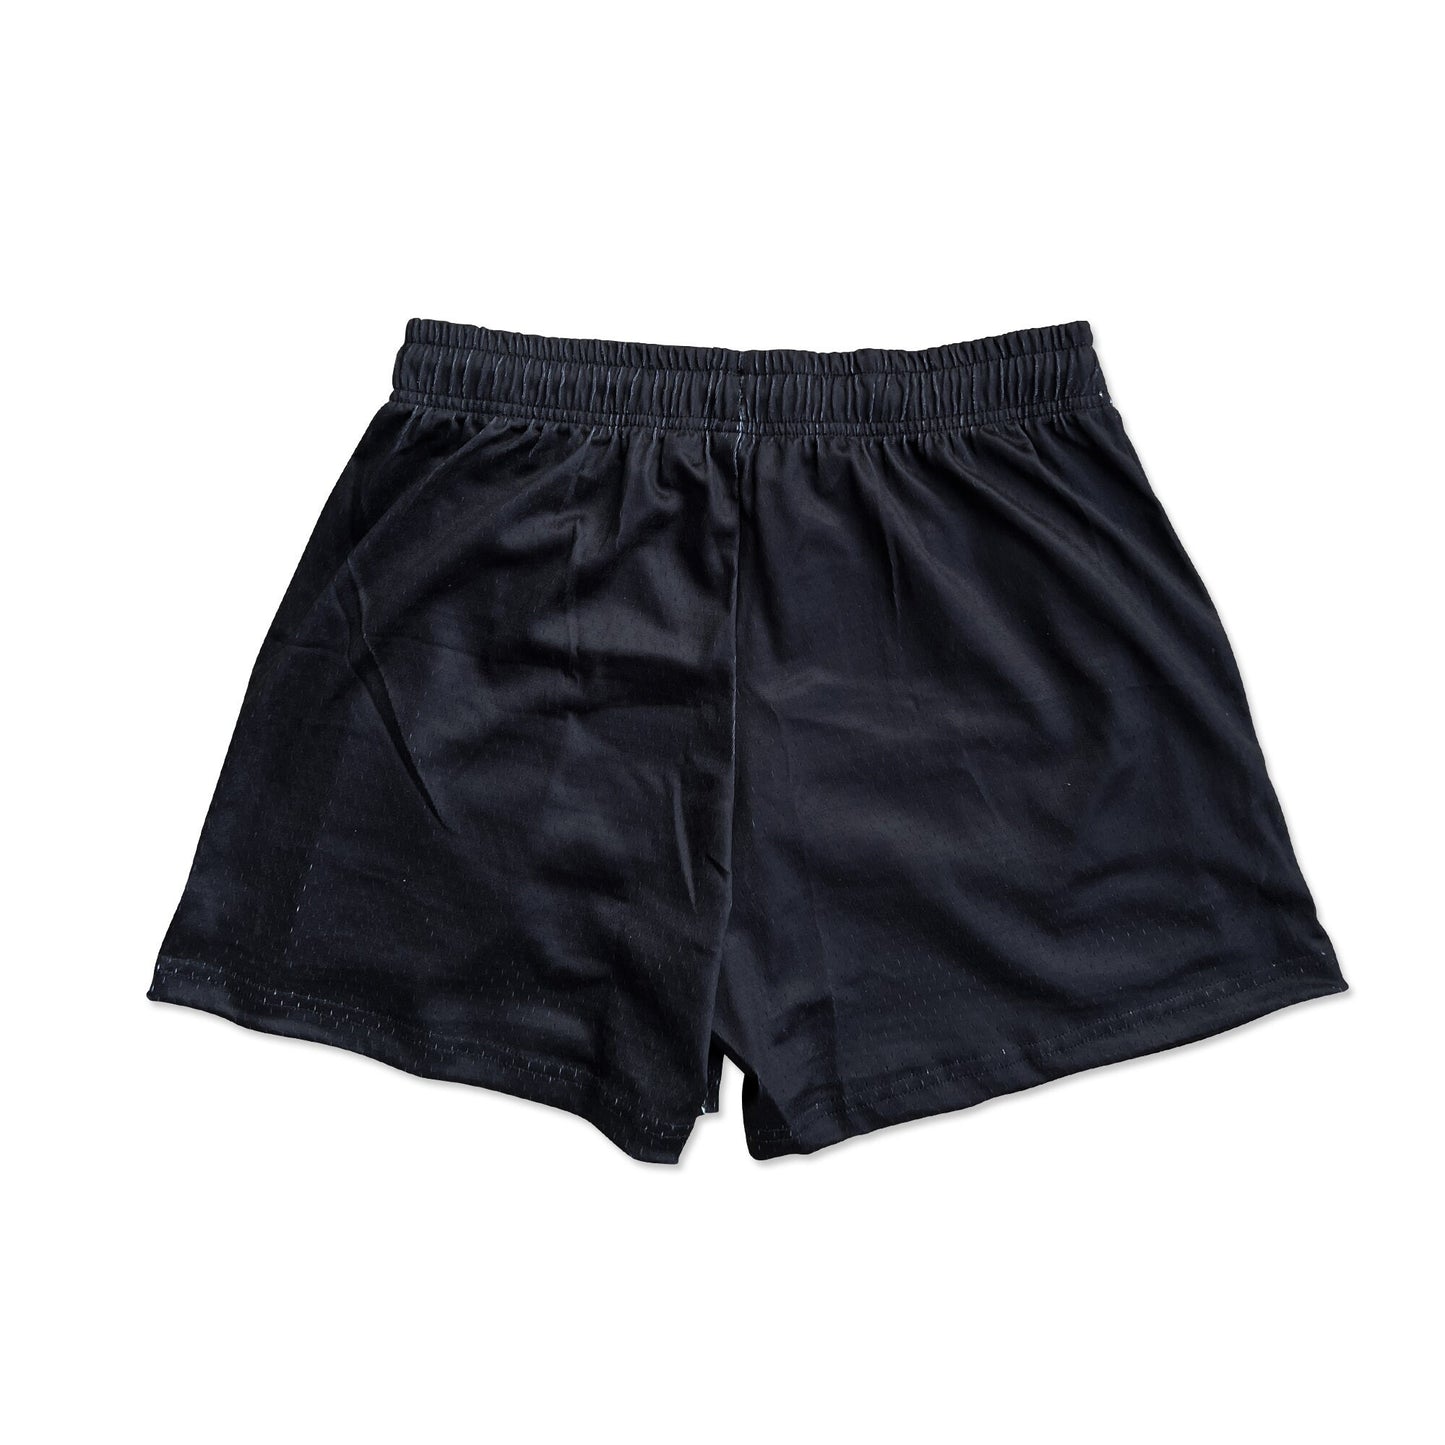 Black - Premium Mesh JJ Shorts - 5 Inch Inseam – JJshorts